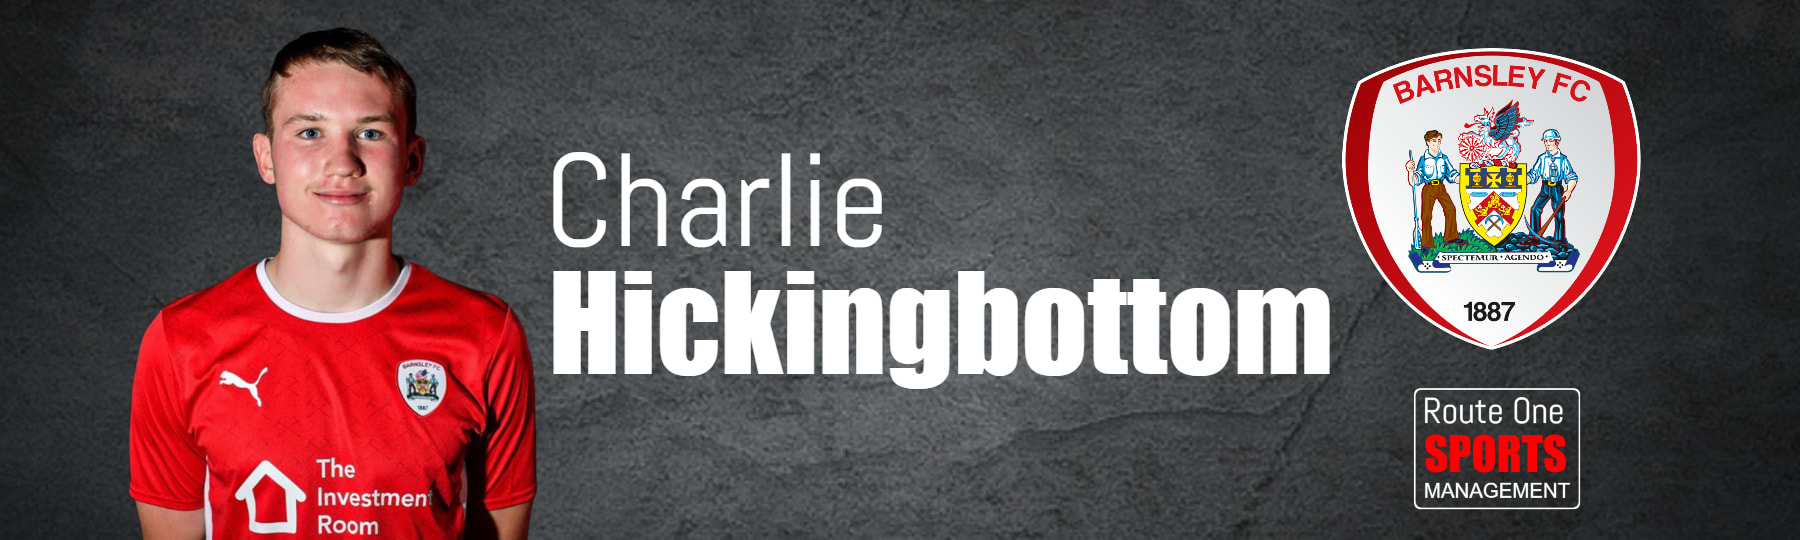 Charlie Hickingbottom of Barnsley FC